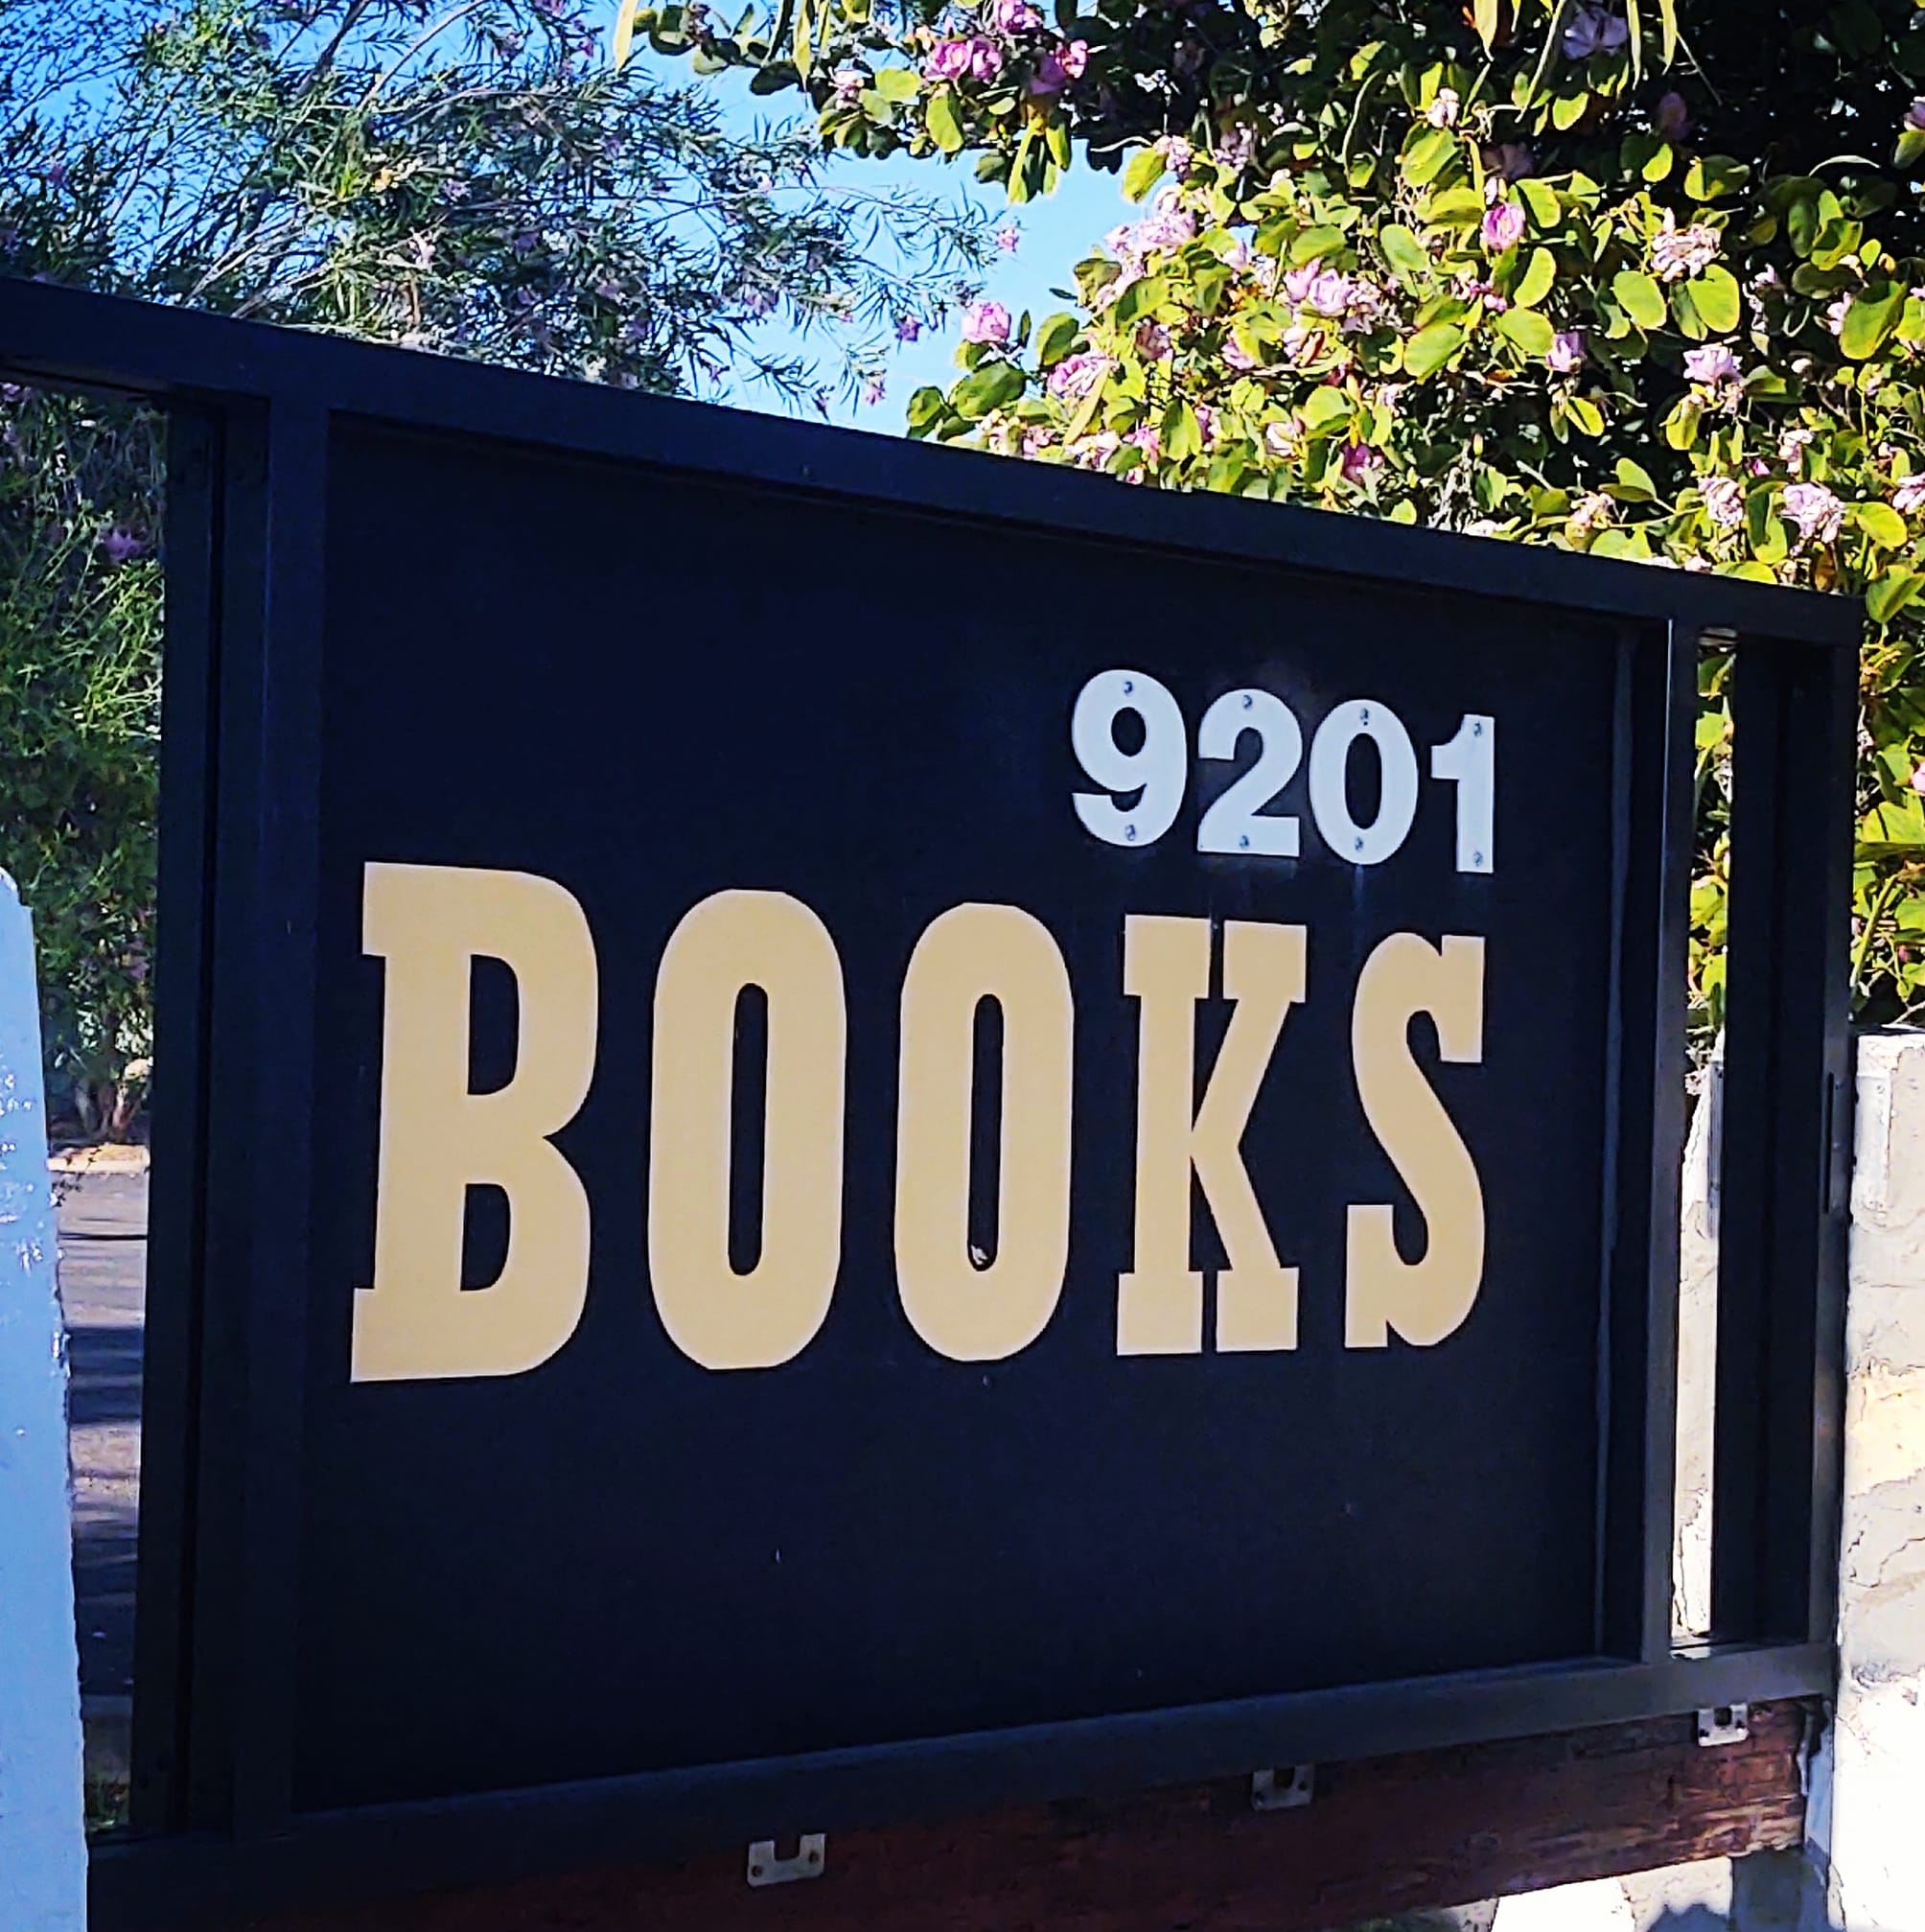 Phoenix Book Store